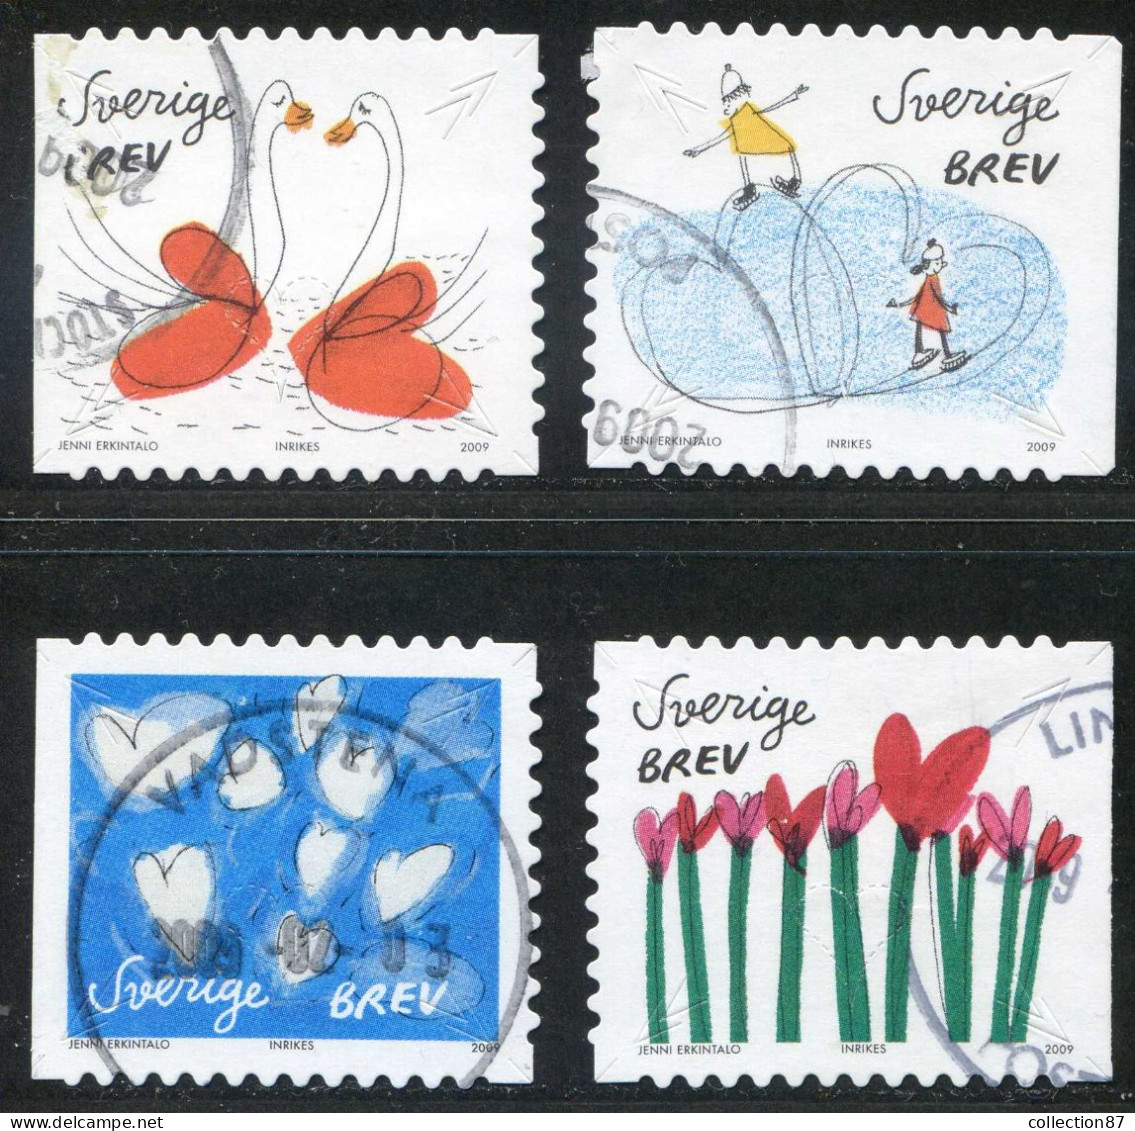 Réf 77 < SUEDE Année 2009 < Yvert N° 2665 à 2668 Ø Used < SWEDEN < Message Ensemble Cygnes Coeur - Used Stamps